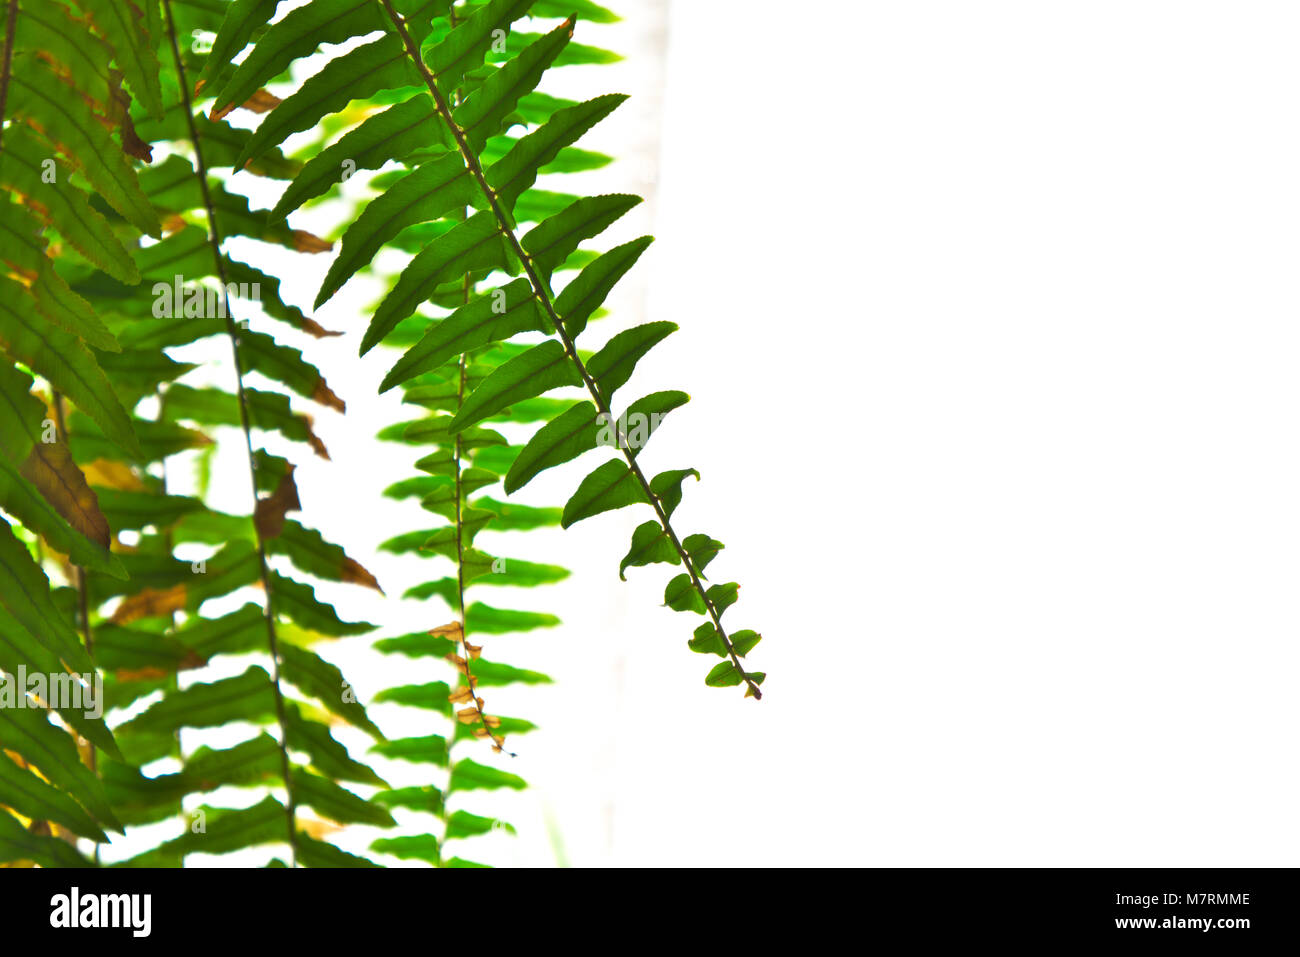 Green fern leaves background Stock Photo